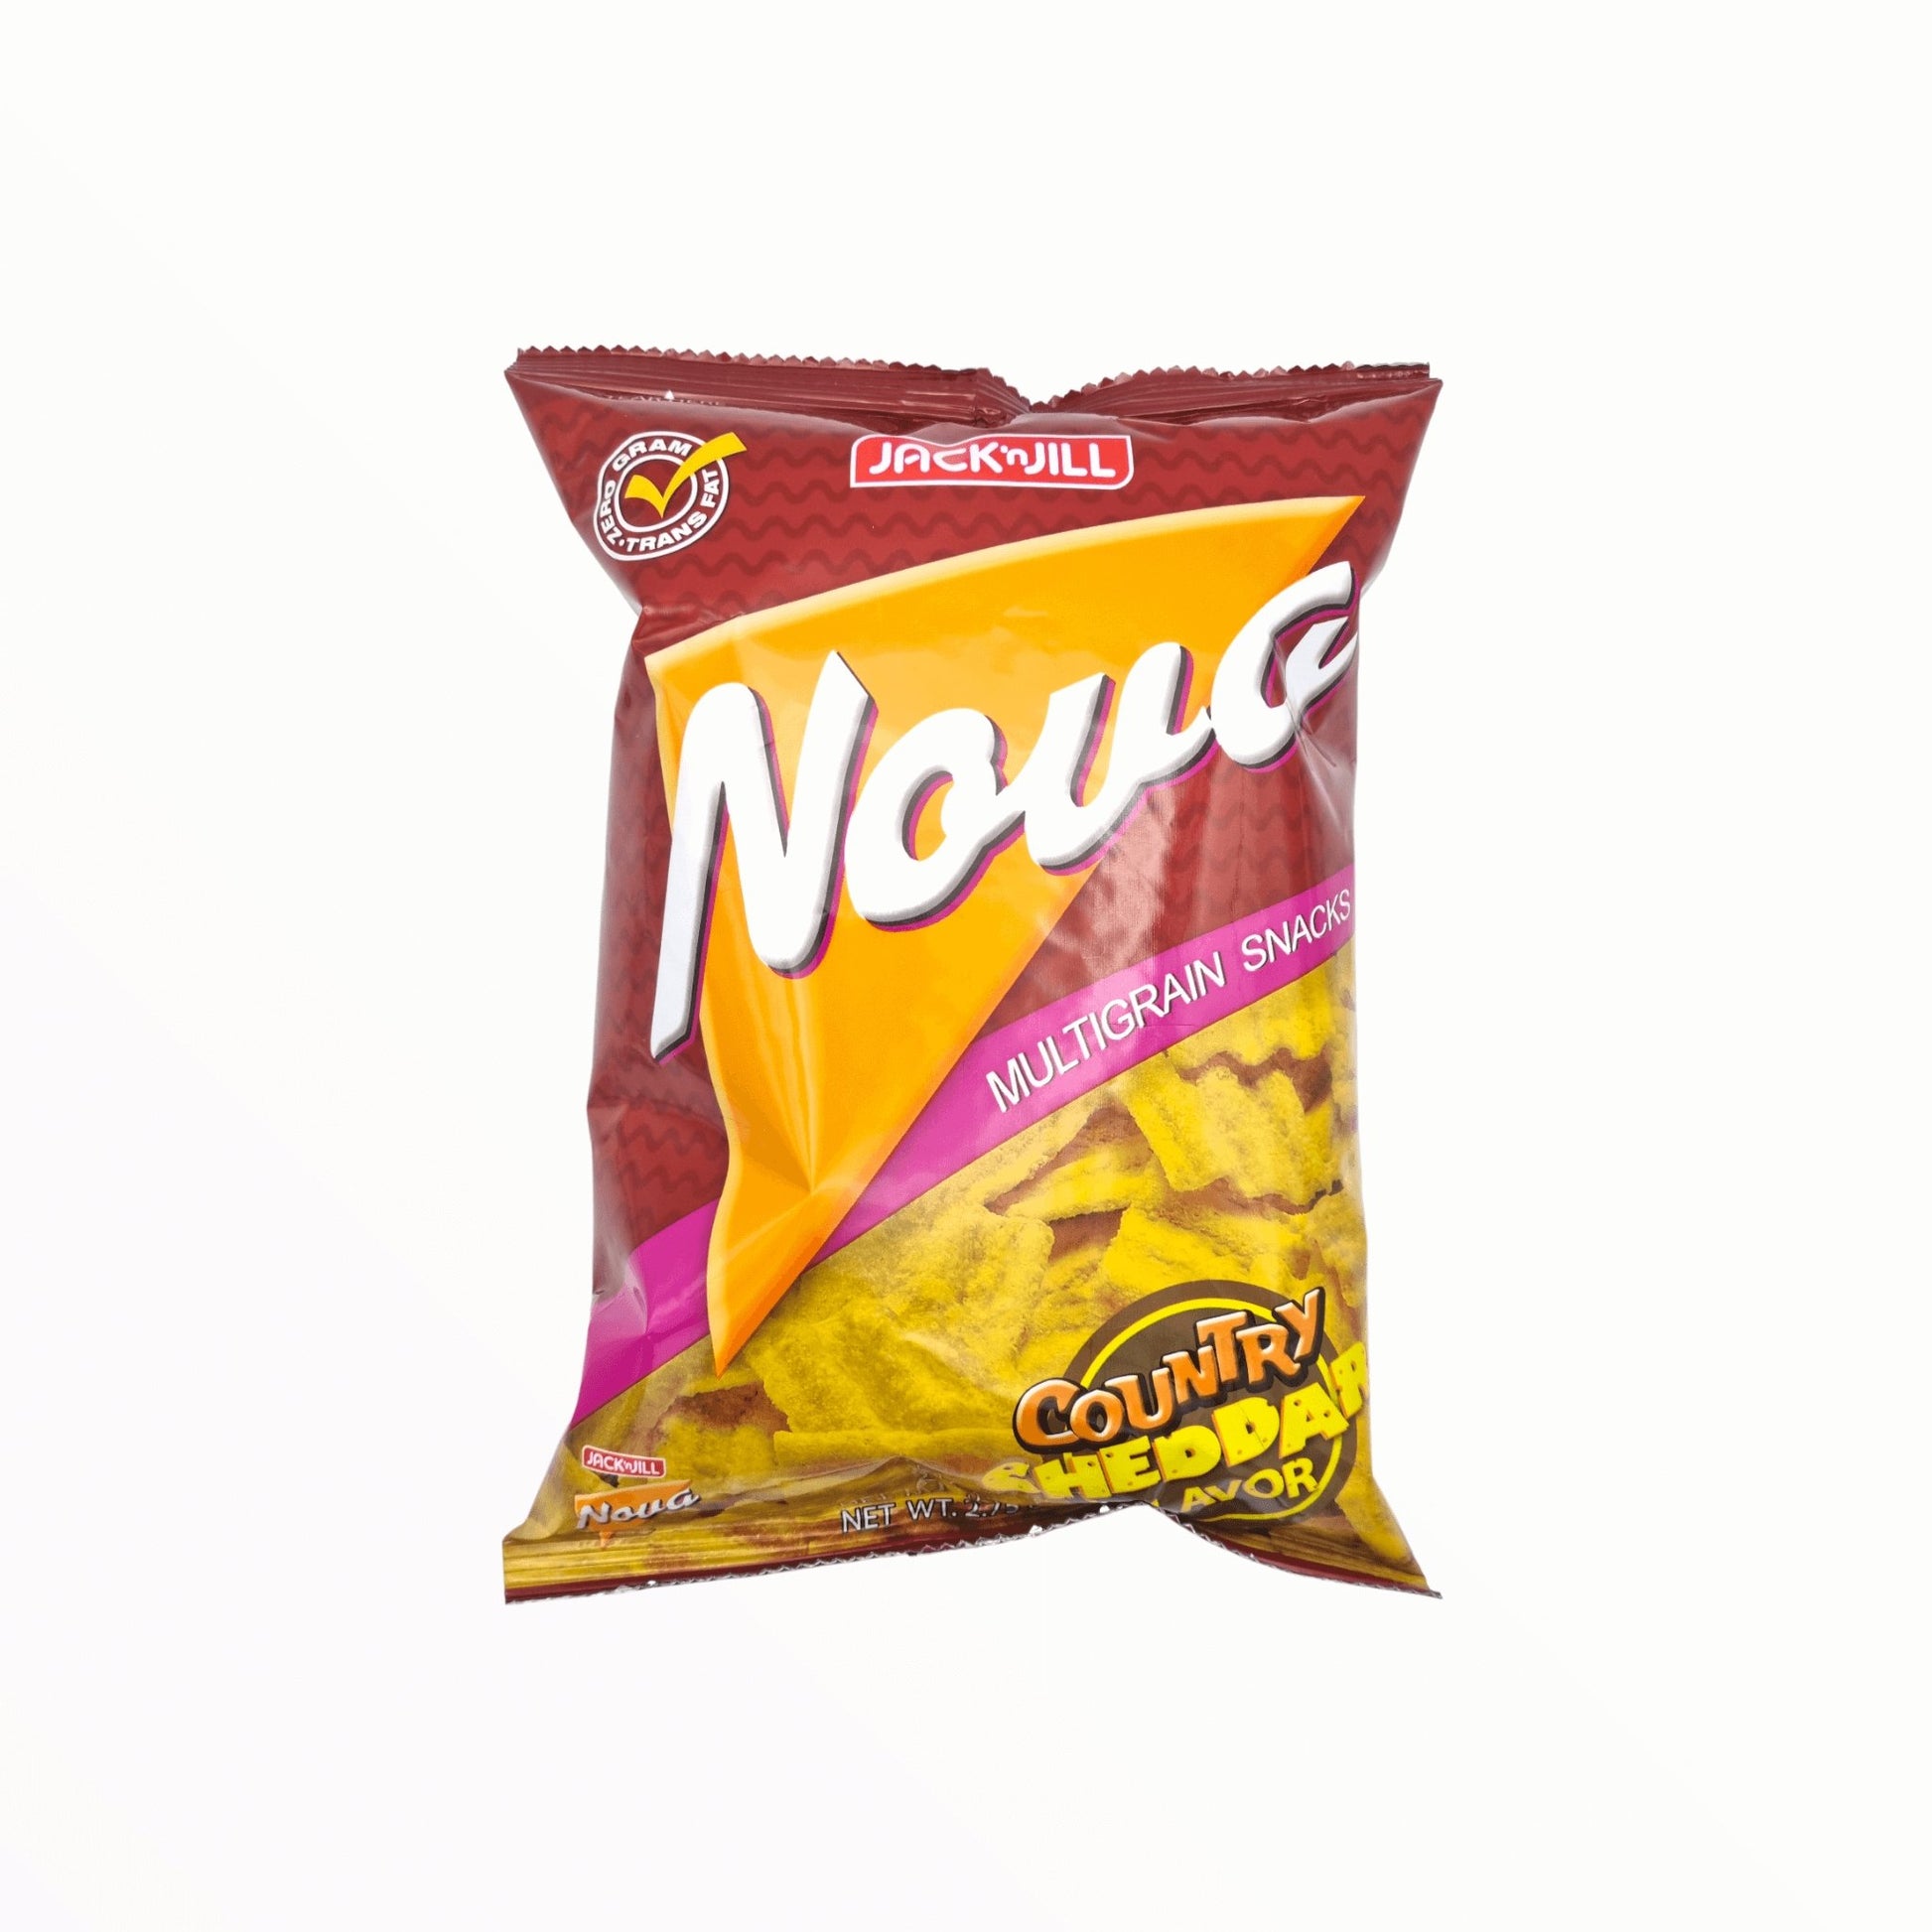 Nova "Country Cheddar" Mehrkorn-Crackers 78g - Mabuhay Pinoy Asia Shop